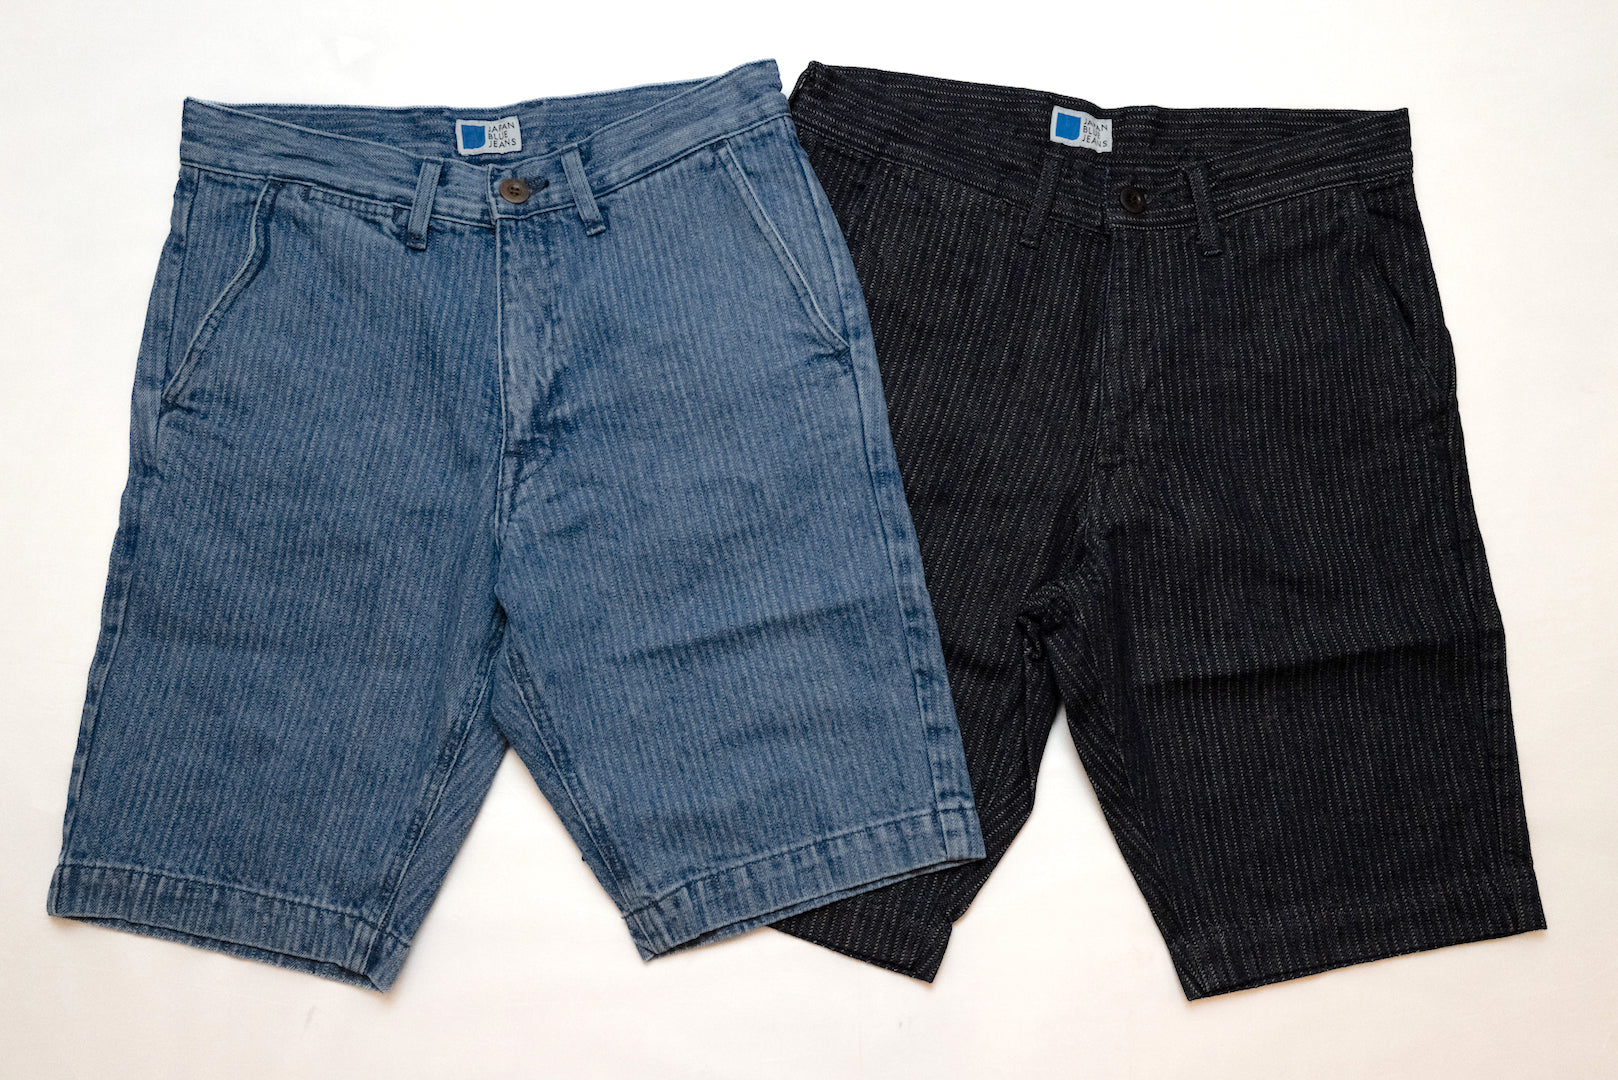 Japan Blue X CORLECTION 11oz HBT Denim Shorts (Washed Indigo)